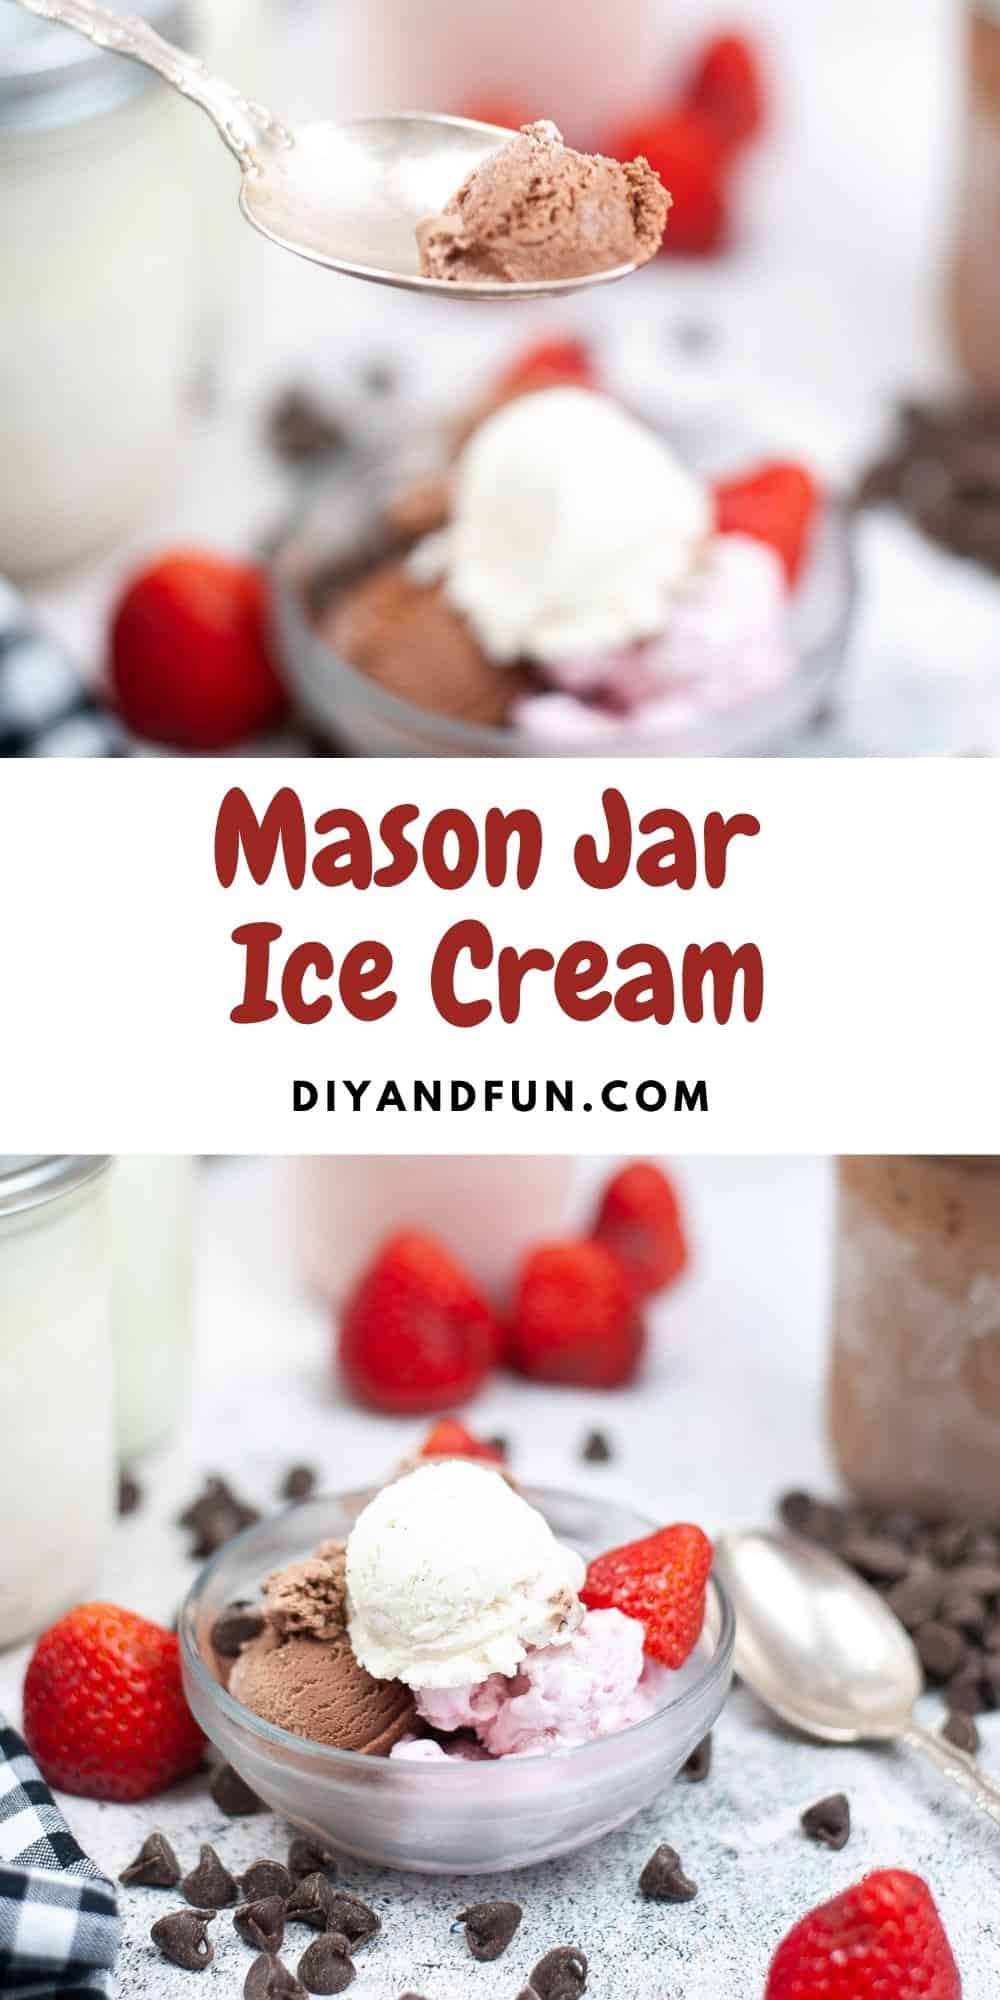 How to Make Mason Jar Ice Cream, a simple recipe idea for making delicious flavored ice cream using a mason jar.